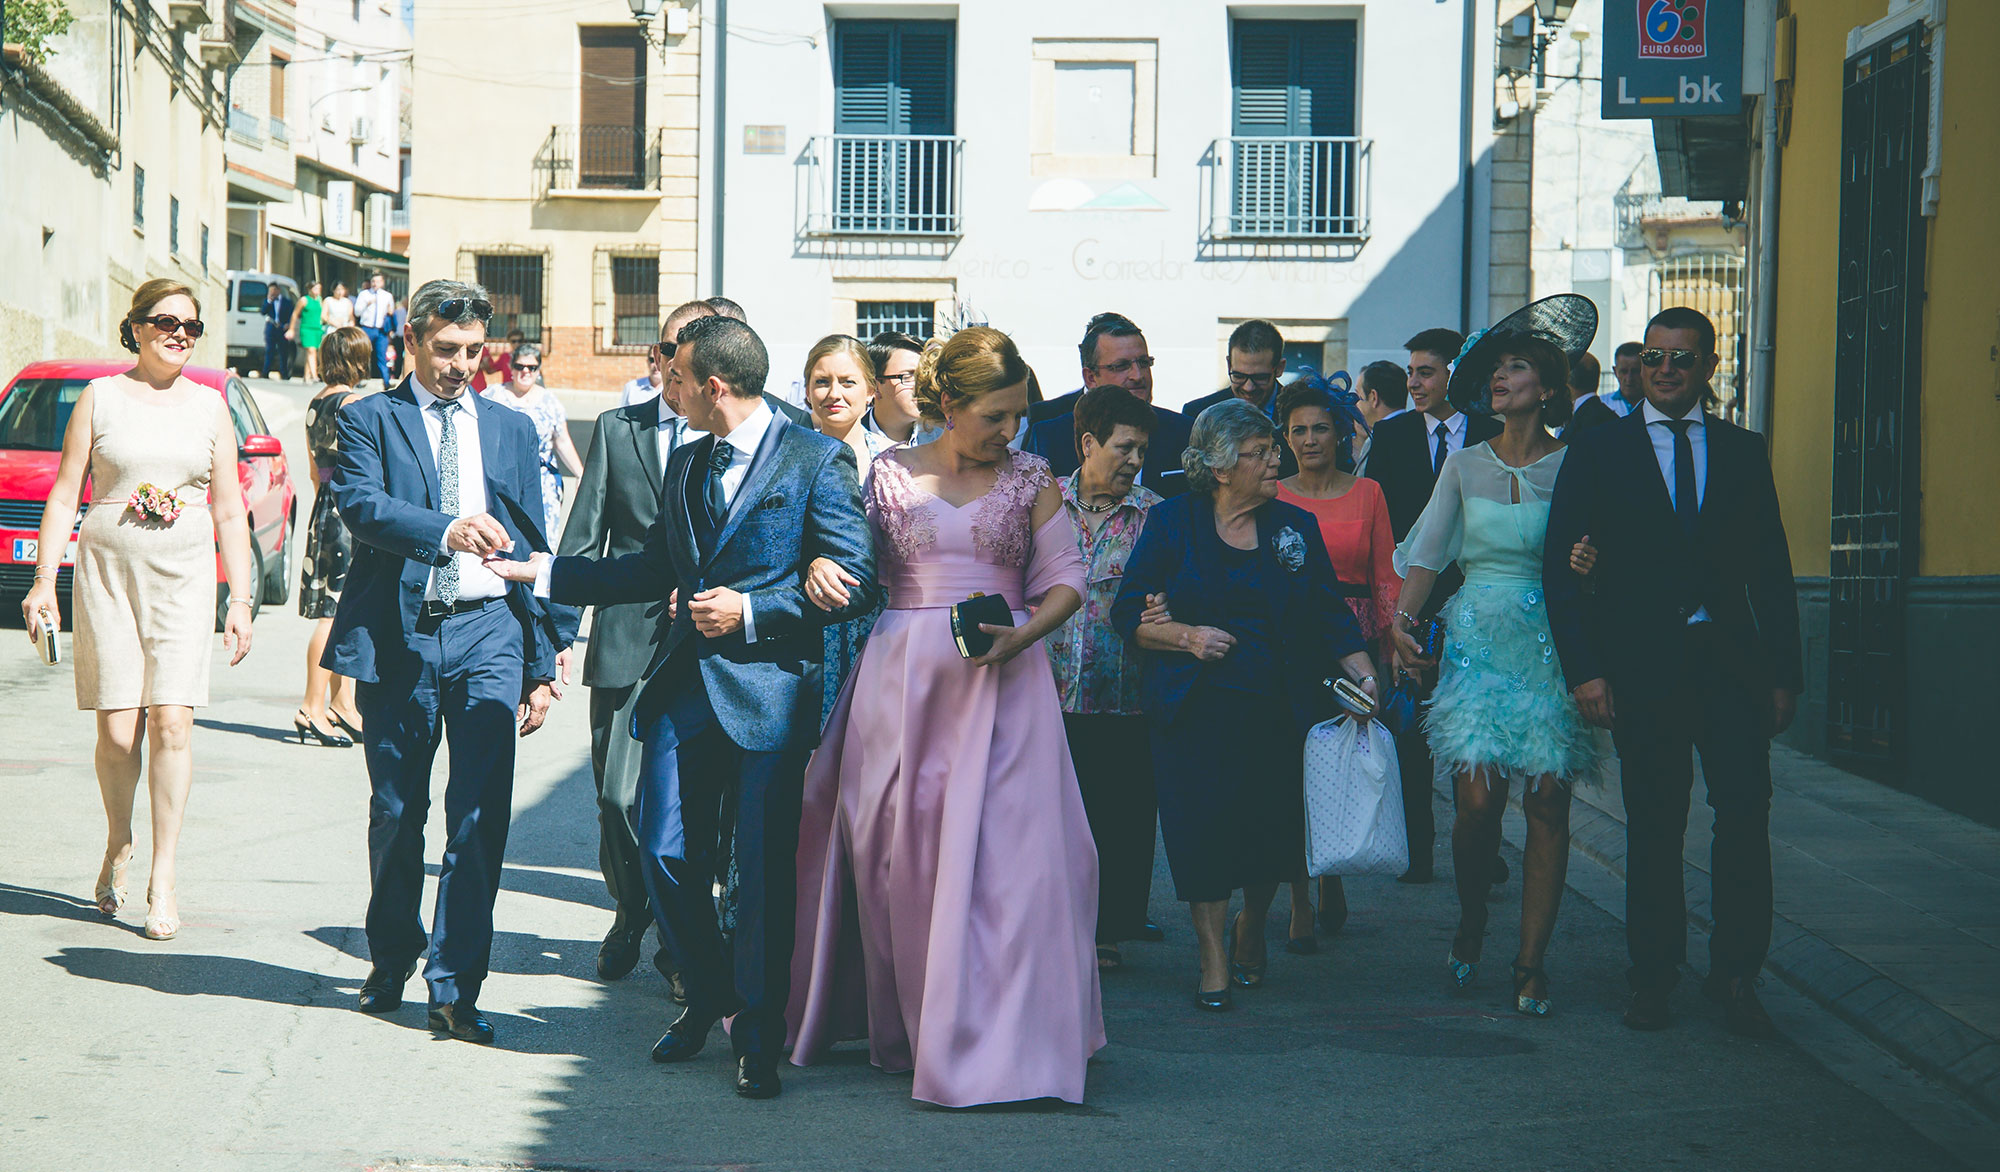 Fotógrafos boda Albacete